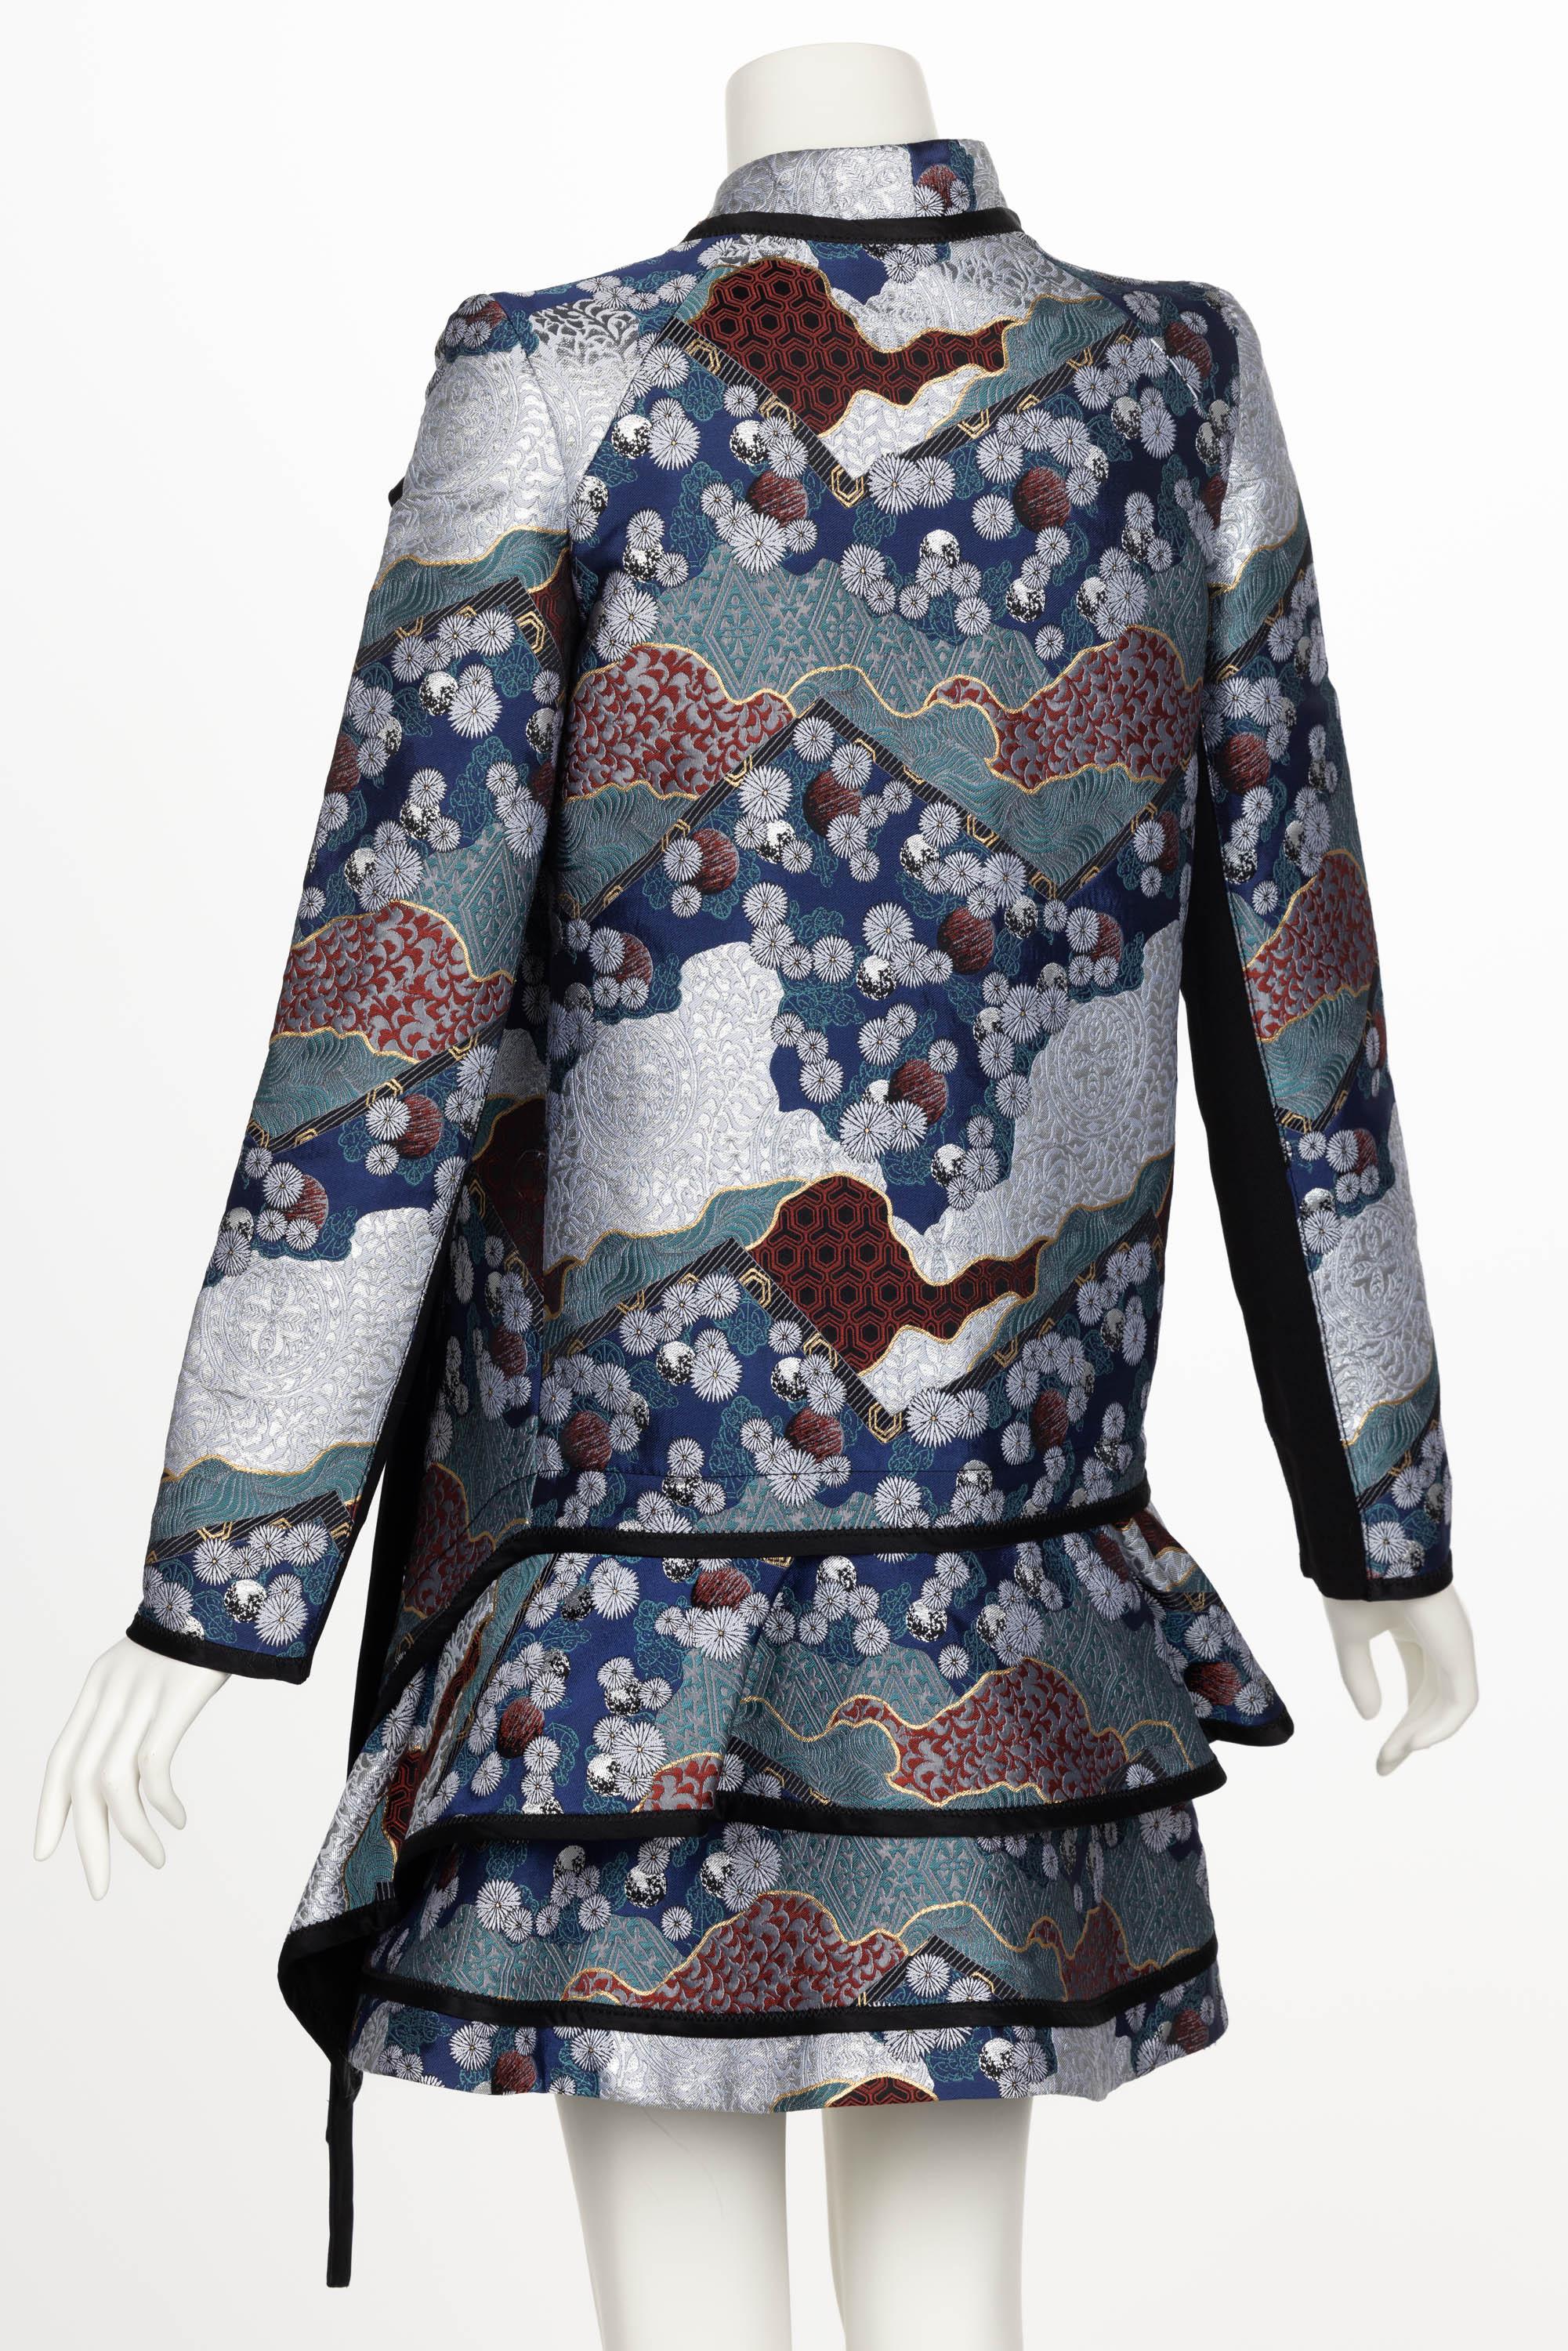 Women's Proenza Schouler Fall 2012 Brocade Dress / Coat For Sale